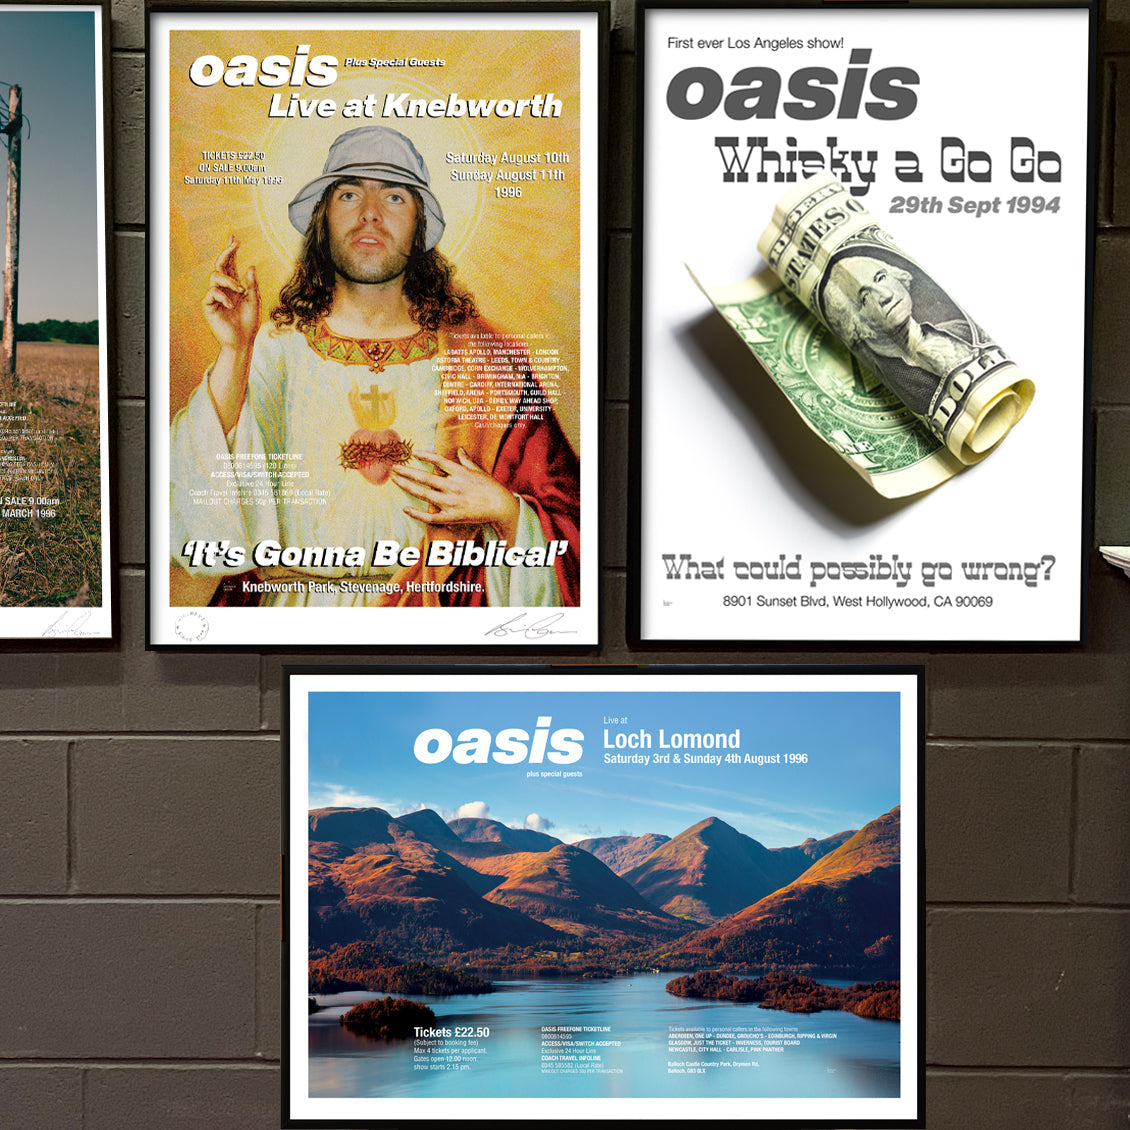 Oasis - Live At Loch Lomond - Gig Poster - New Item